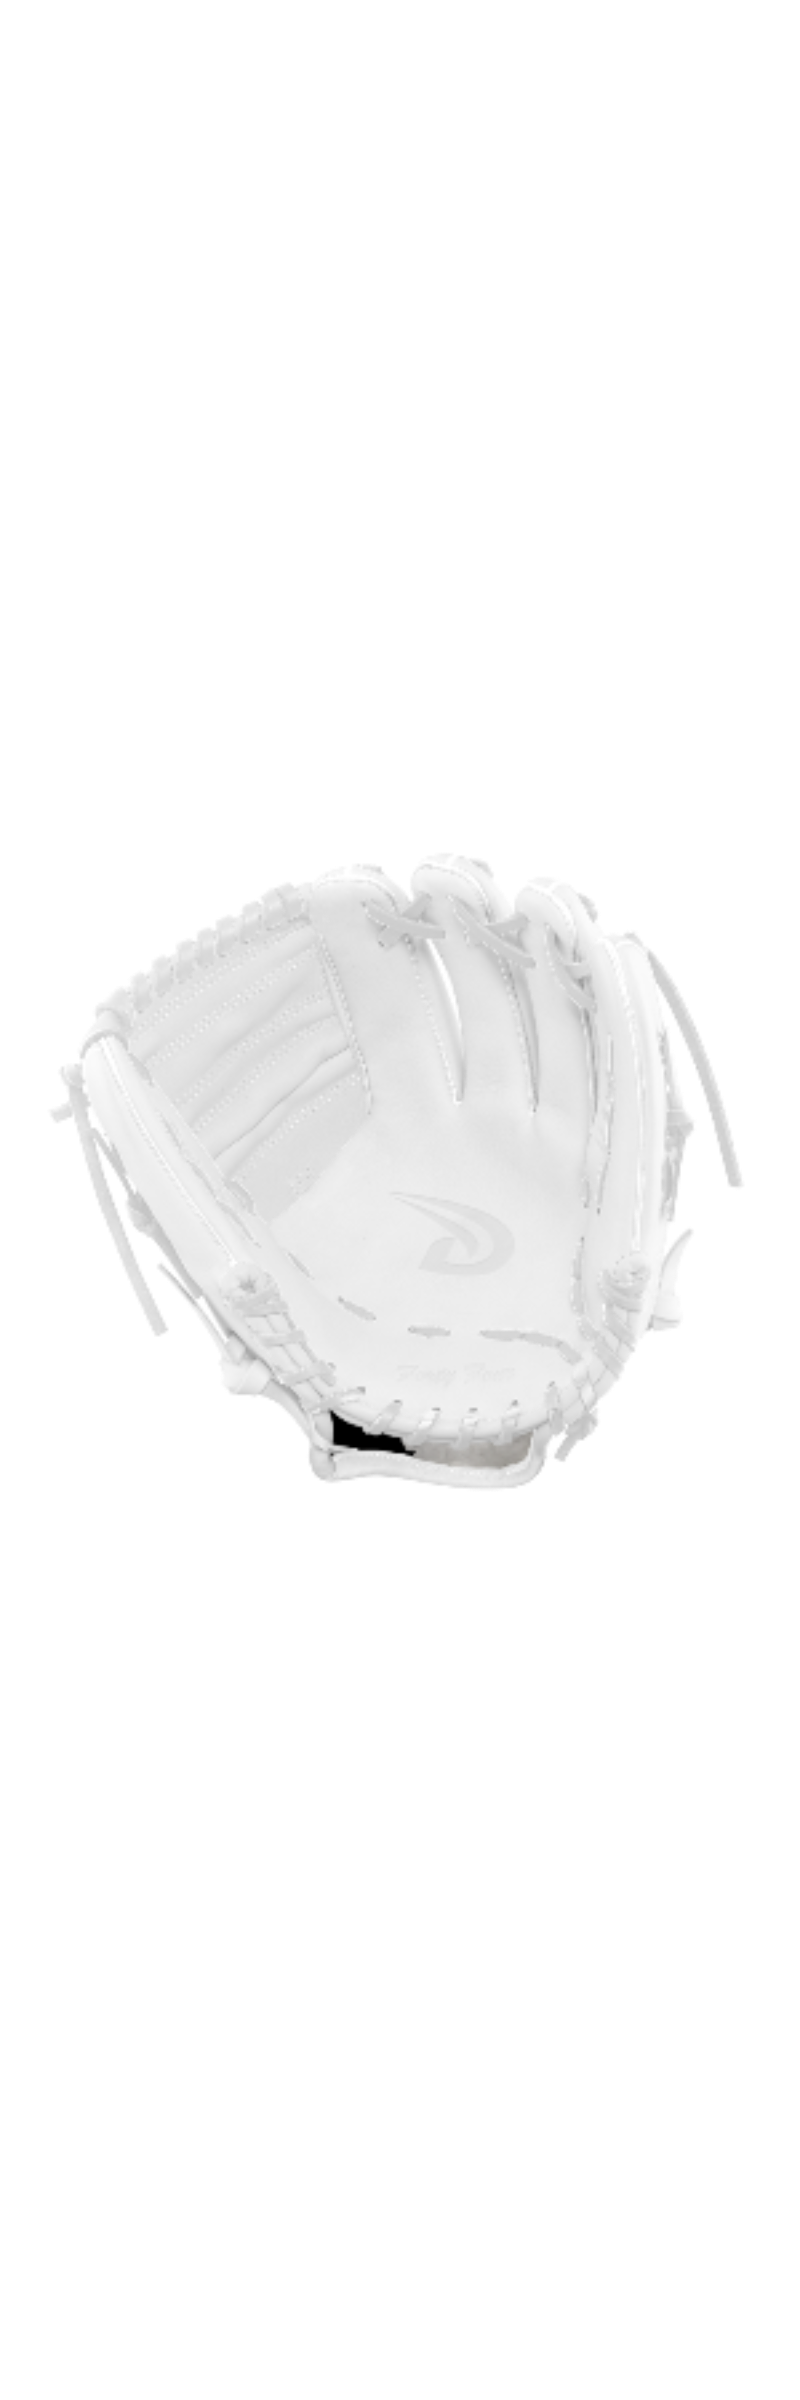 Dux Sports Custom Gloves - English - Customer's Product with price 0.00 ID O7hHU4ID4QohARrMf6QkF4zm